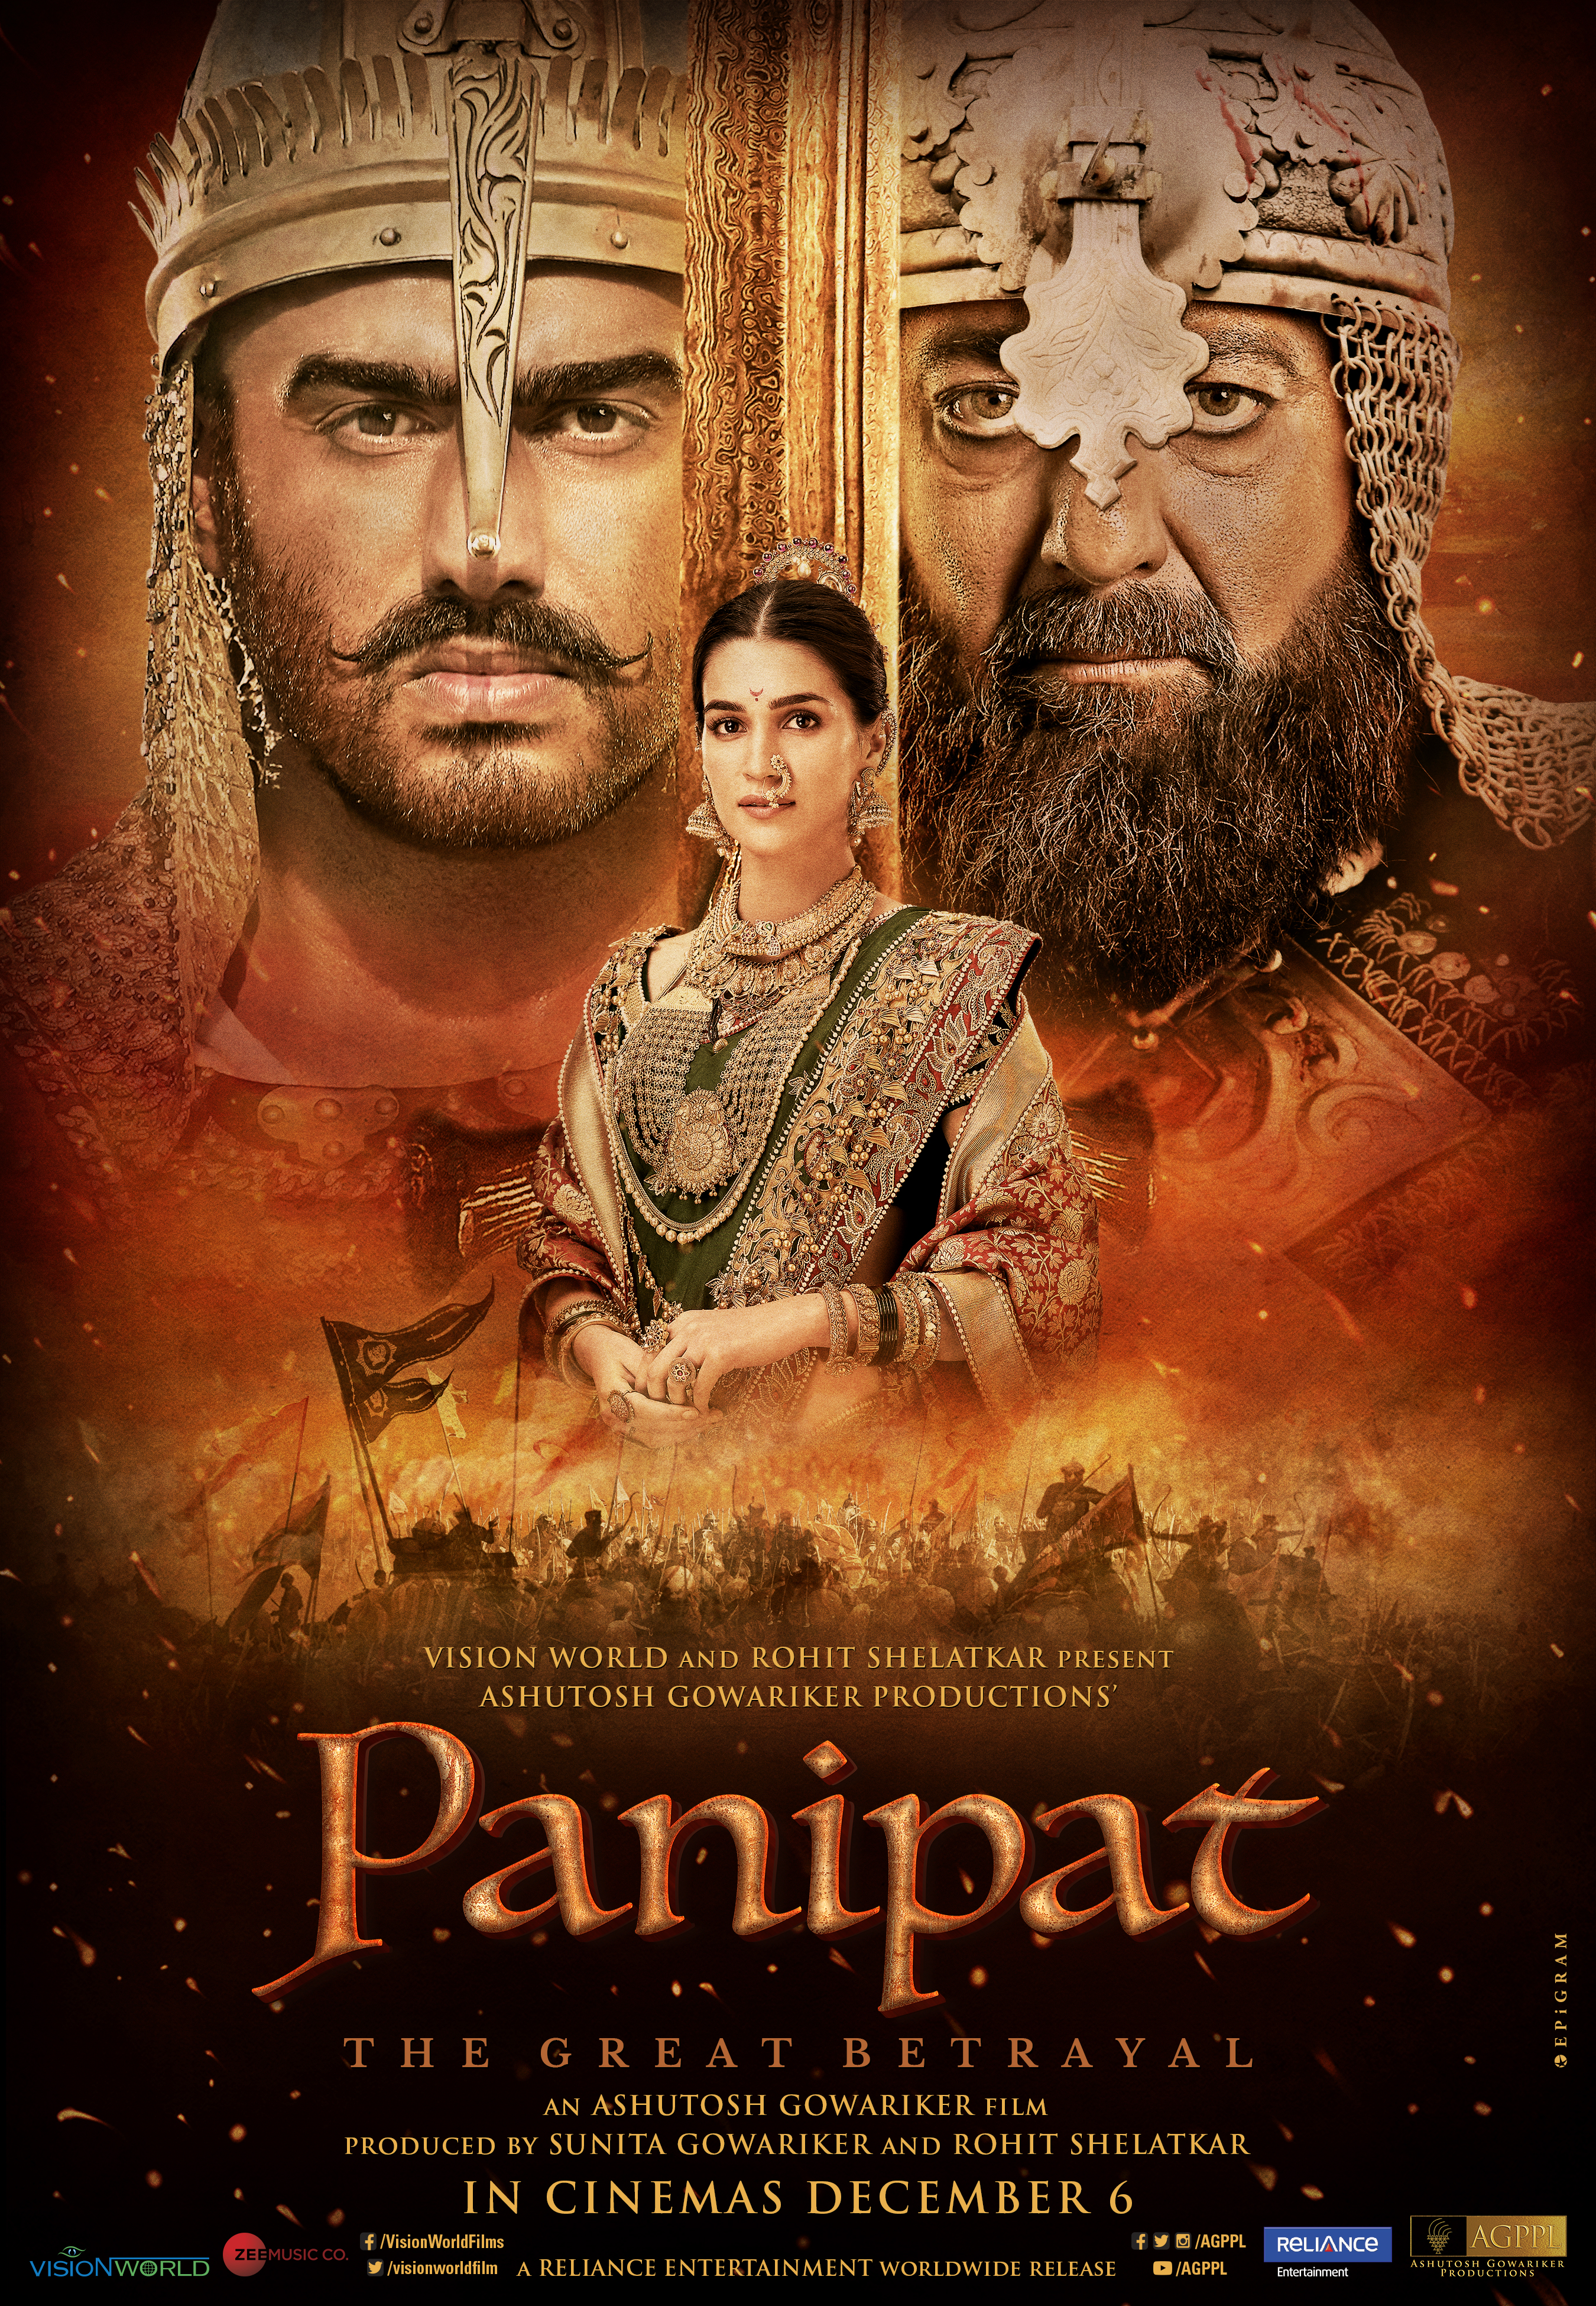 Nonton film Panipat layarkaca21 indoxx1 ganool online streaming terbaru